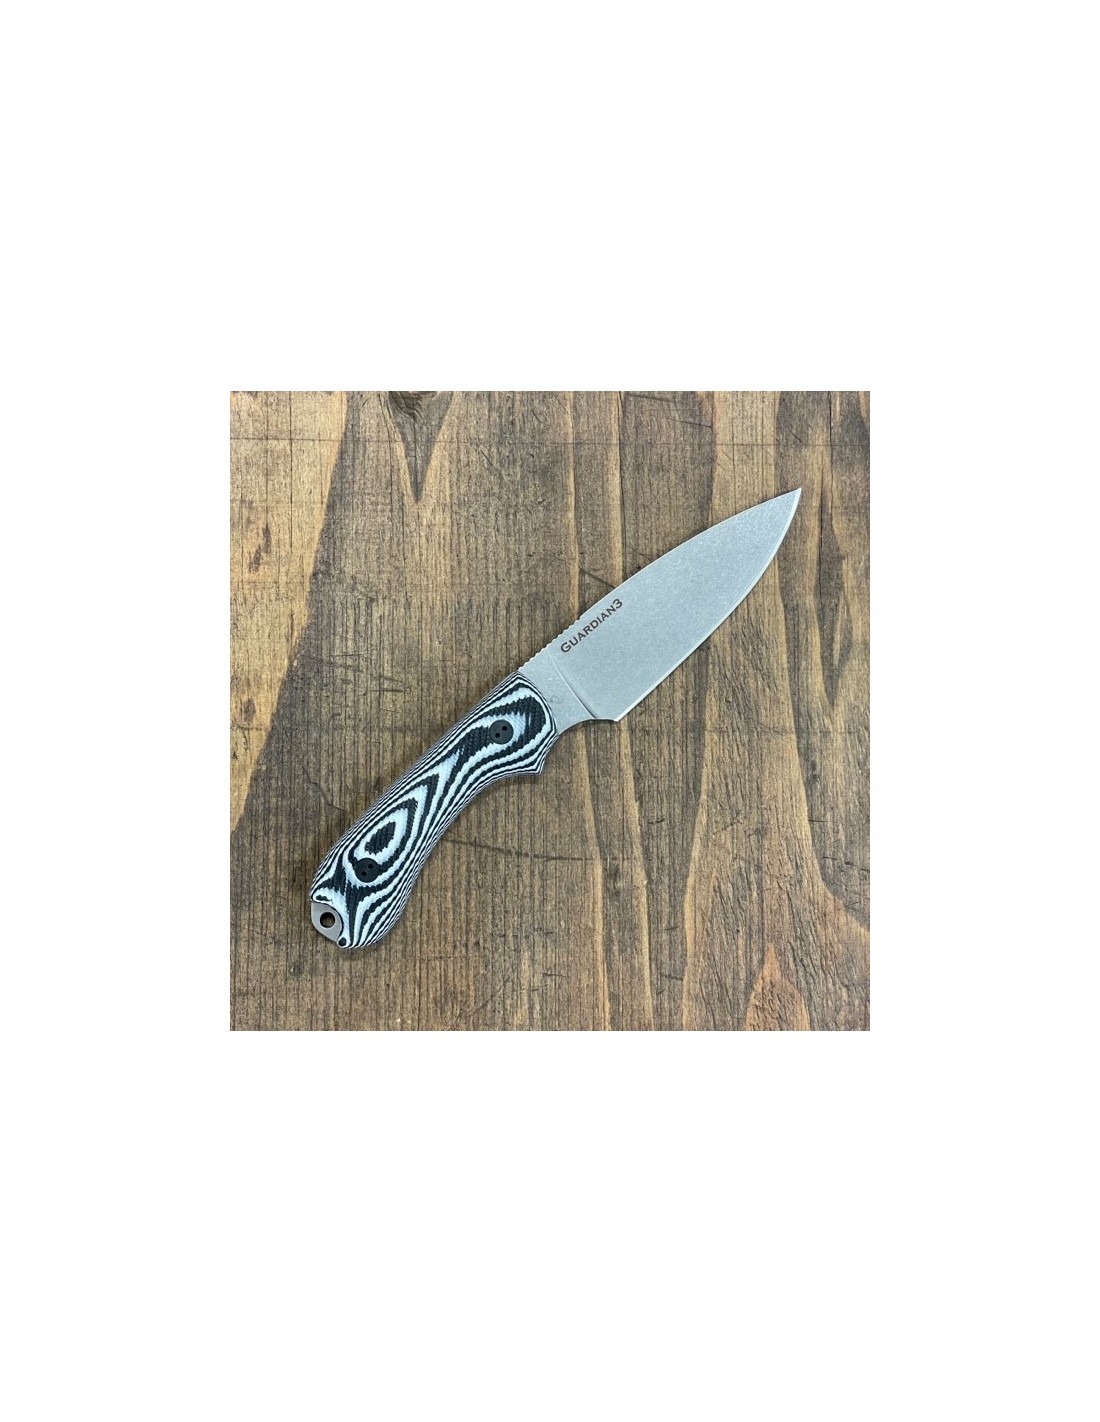 bradfordknives.com